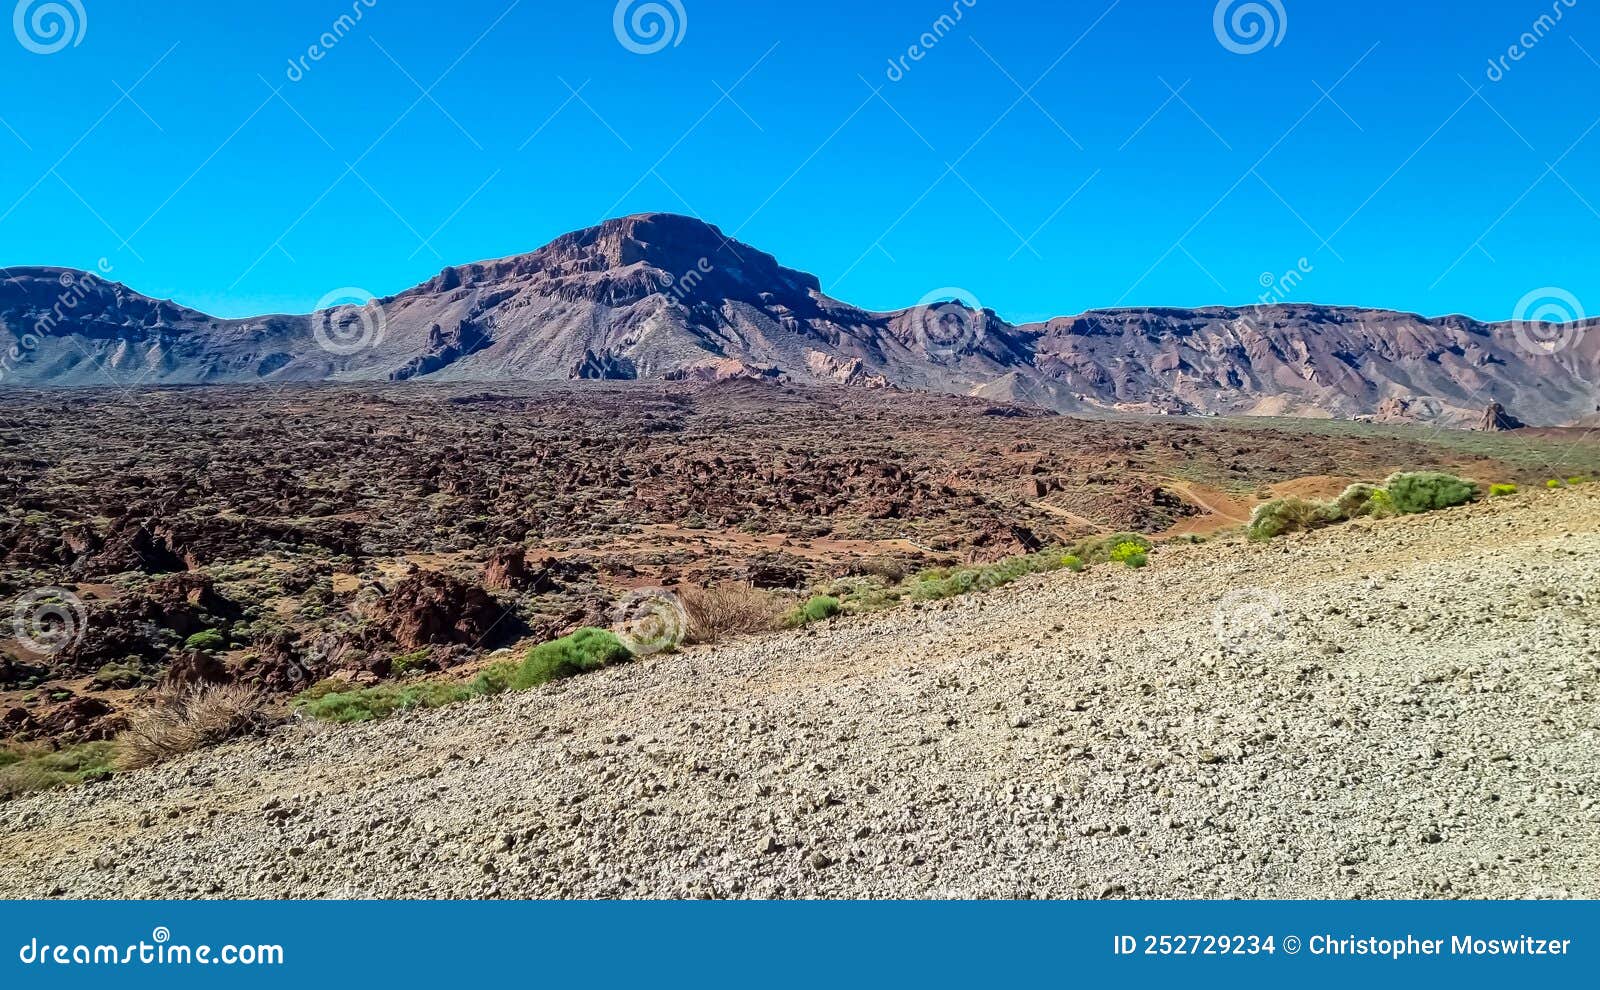 teide - panoramic view on guajara seen from montana majua in volcano mount teide national park, tenerife, spain